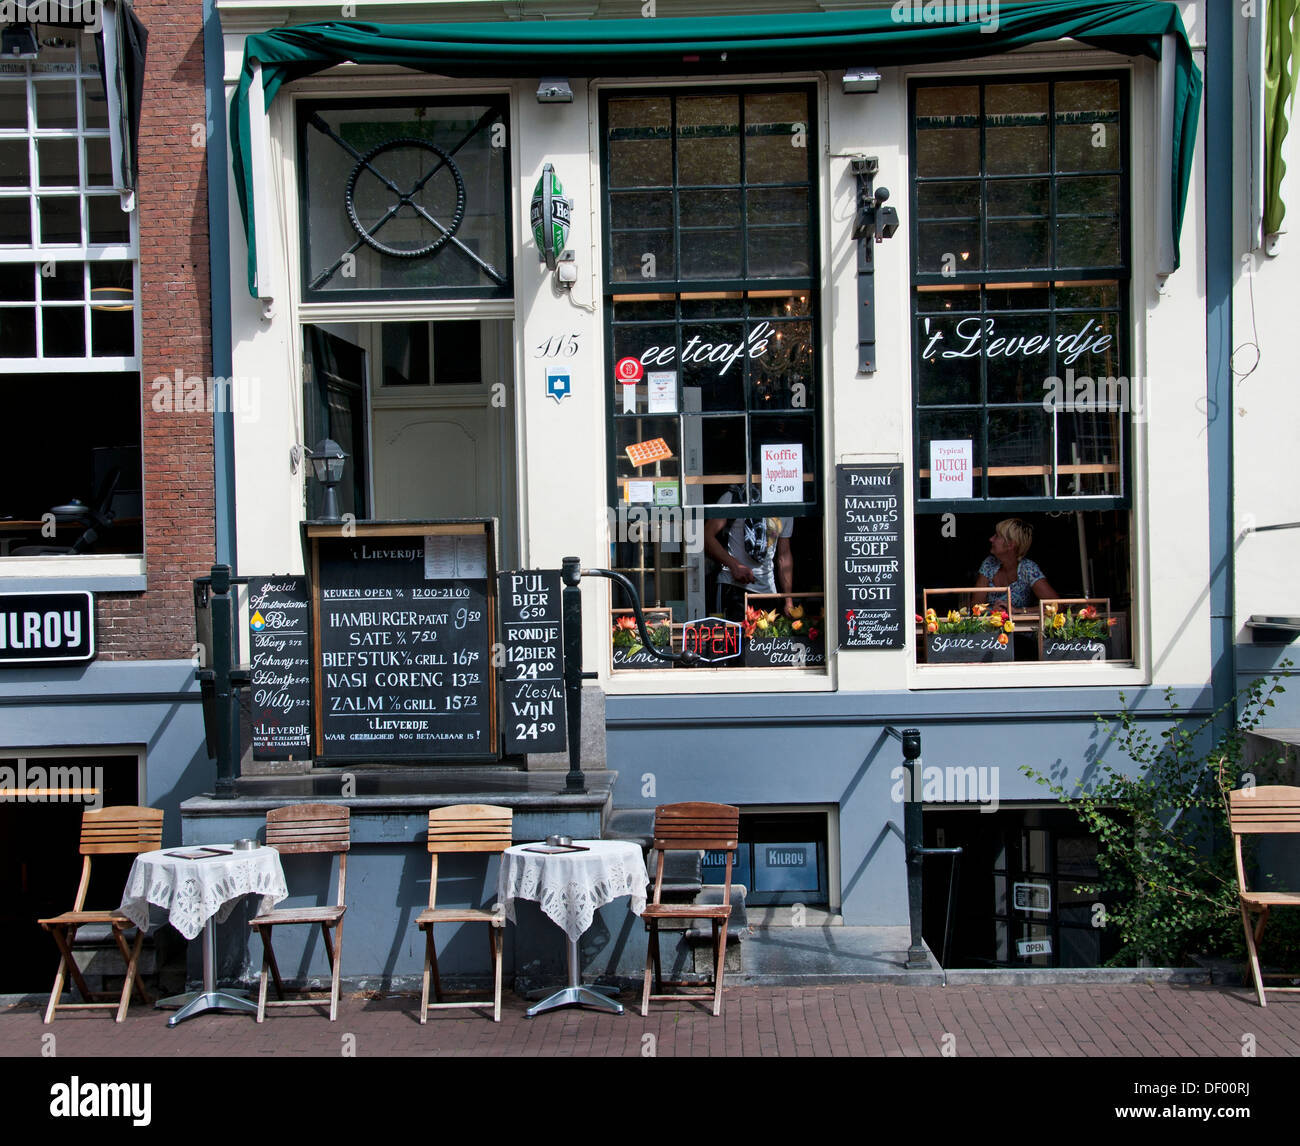 Eetcafe 't Lieverdje Singel Amsterdam Cafe Restaurant  bar pub Netherlands Stock Photo